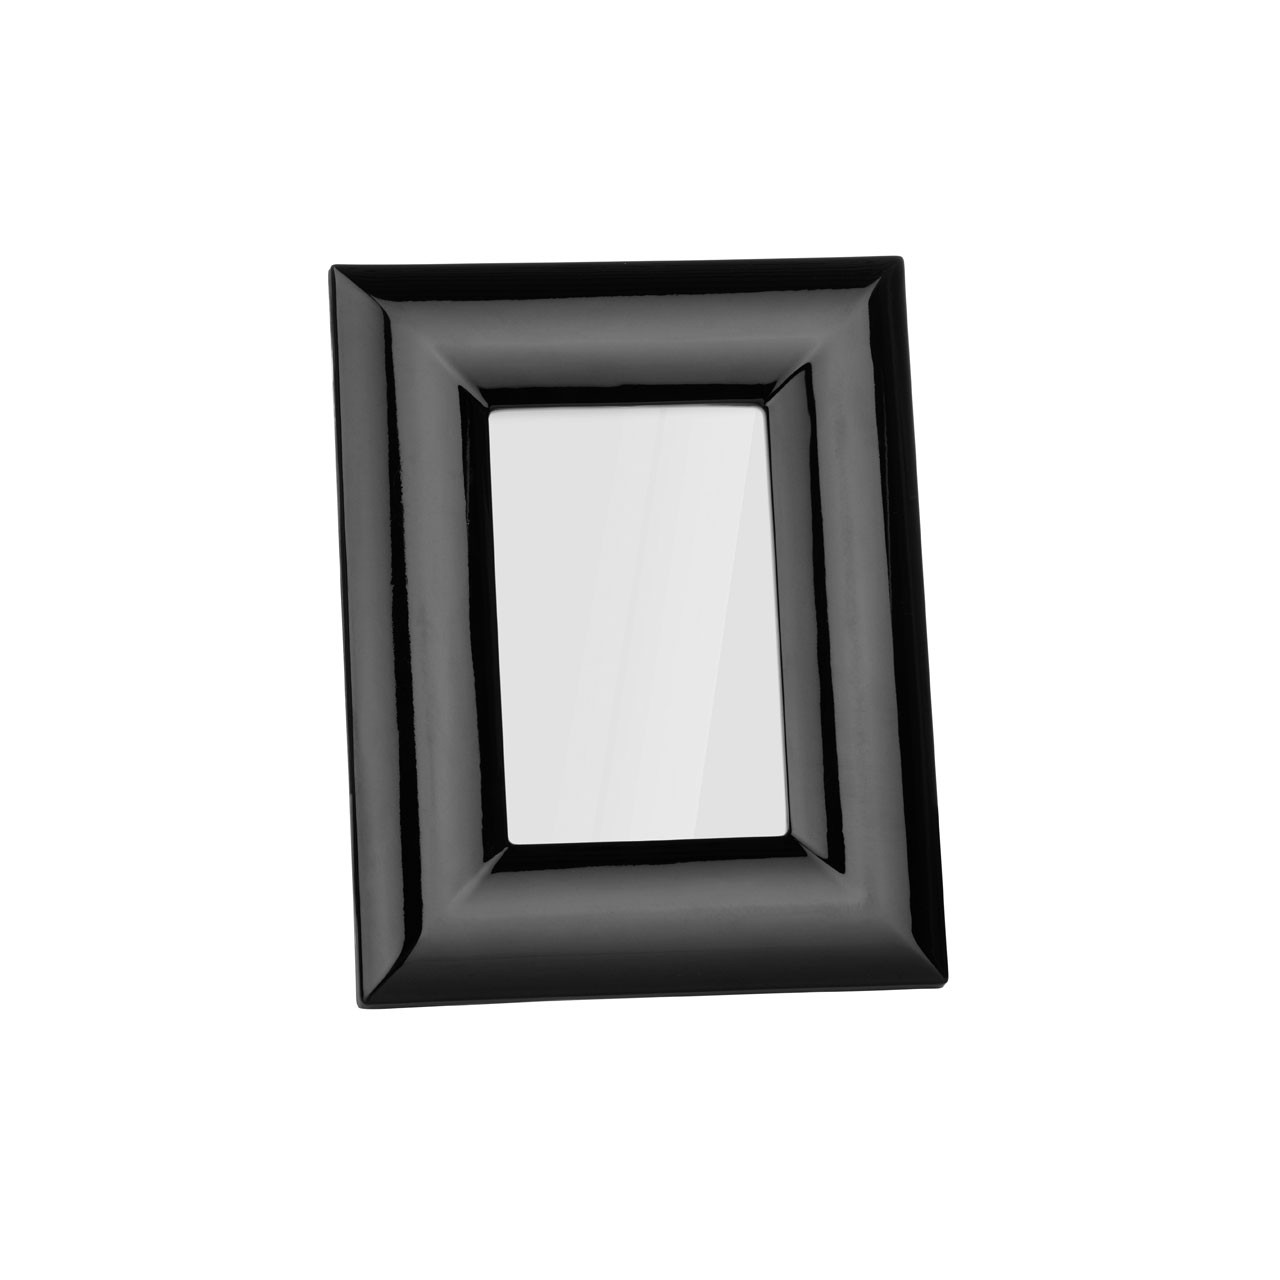 High Gloss Photo Frame, 4 x 6 Inches - Black